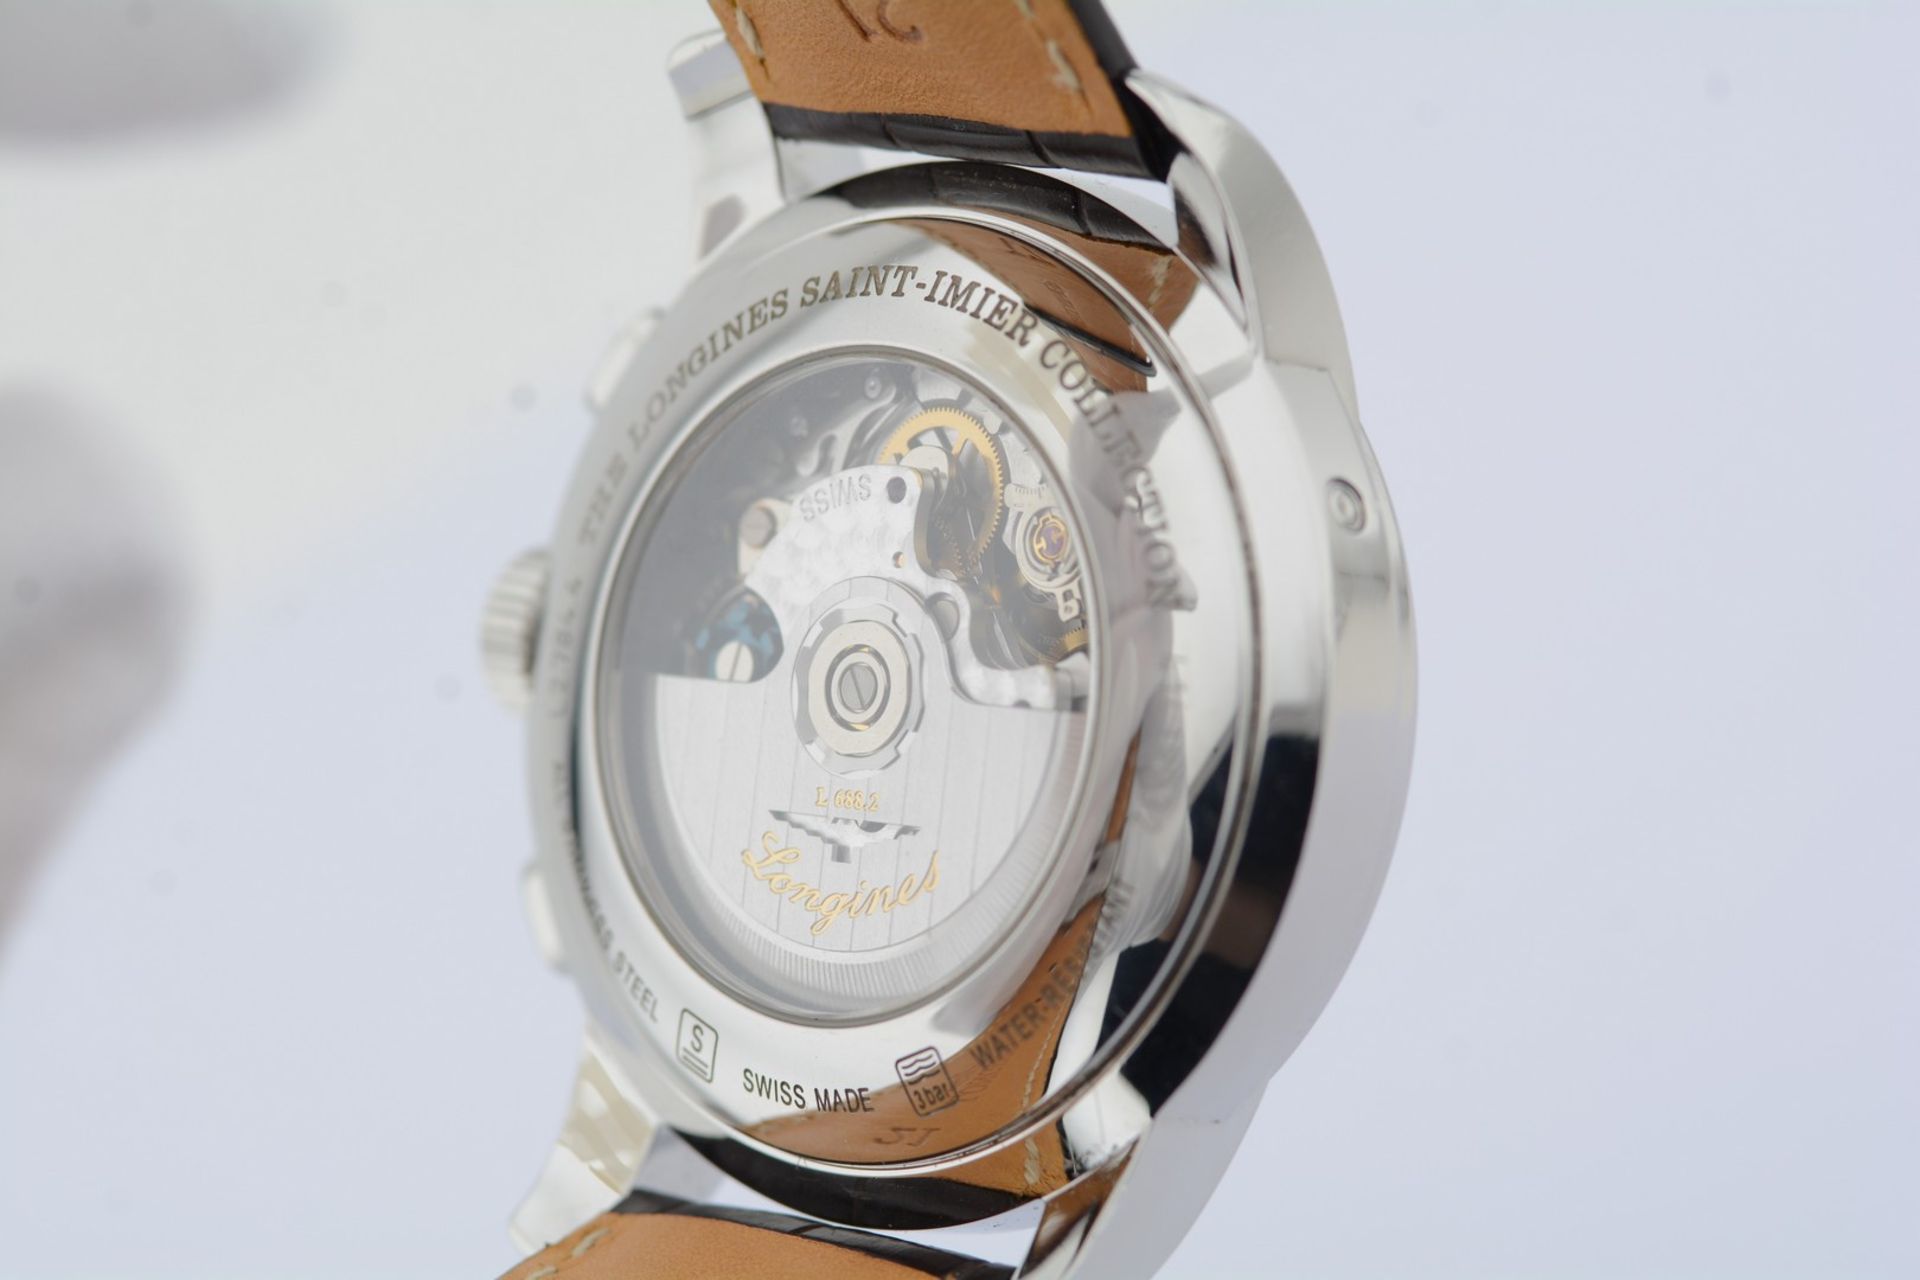 Longines / L2.784.4 Saint-Imier Collection Chronograph Automatic - Gentlmen's Steel Wrist Watch - Image 6 of 10